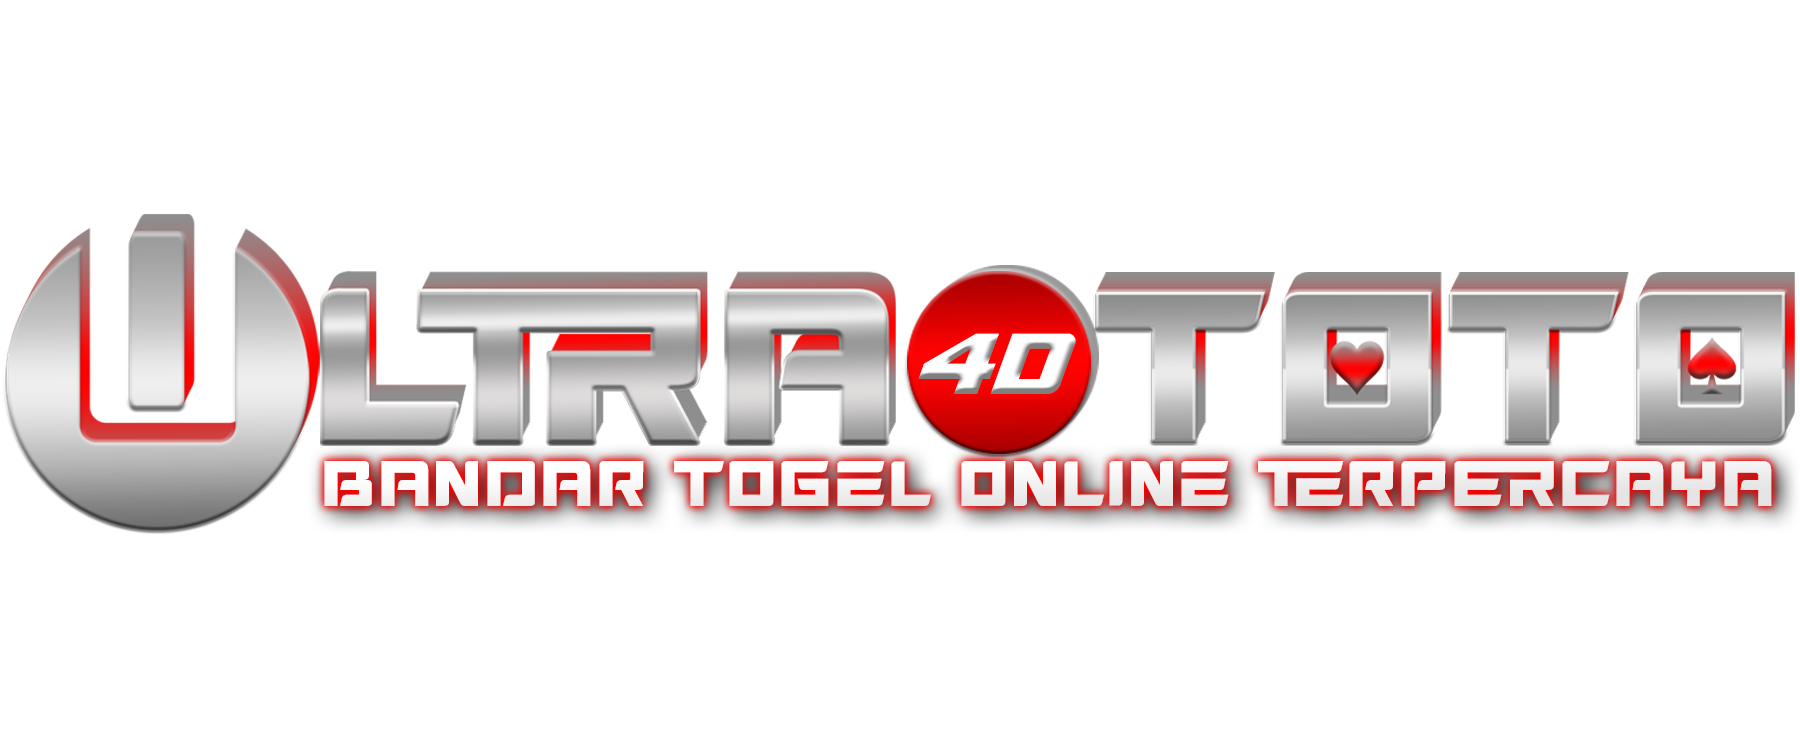 Ultra4D Toto Slot Online